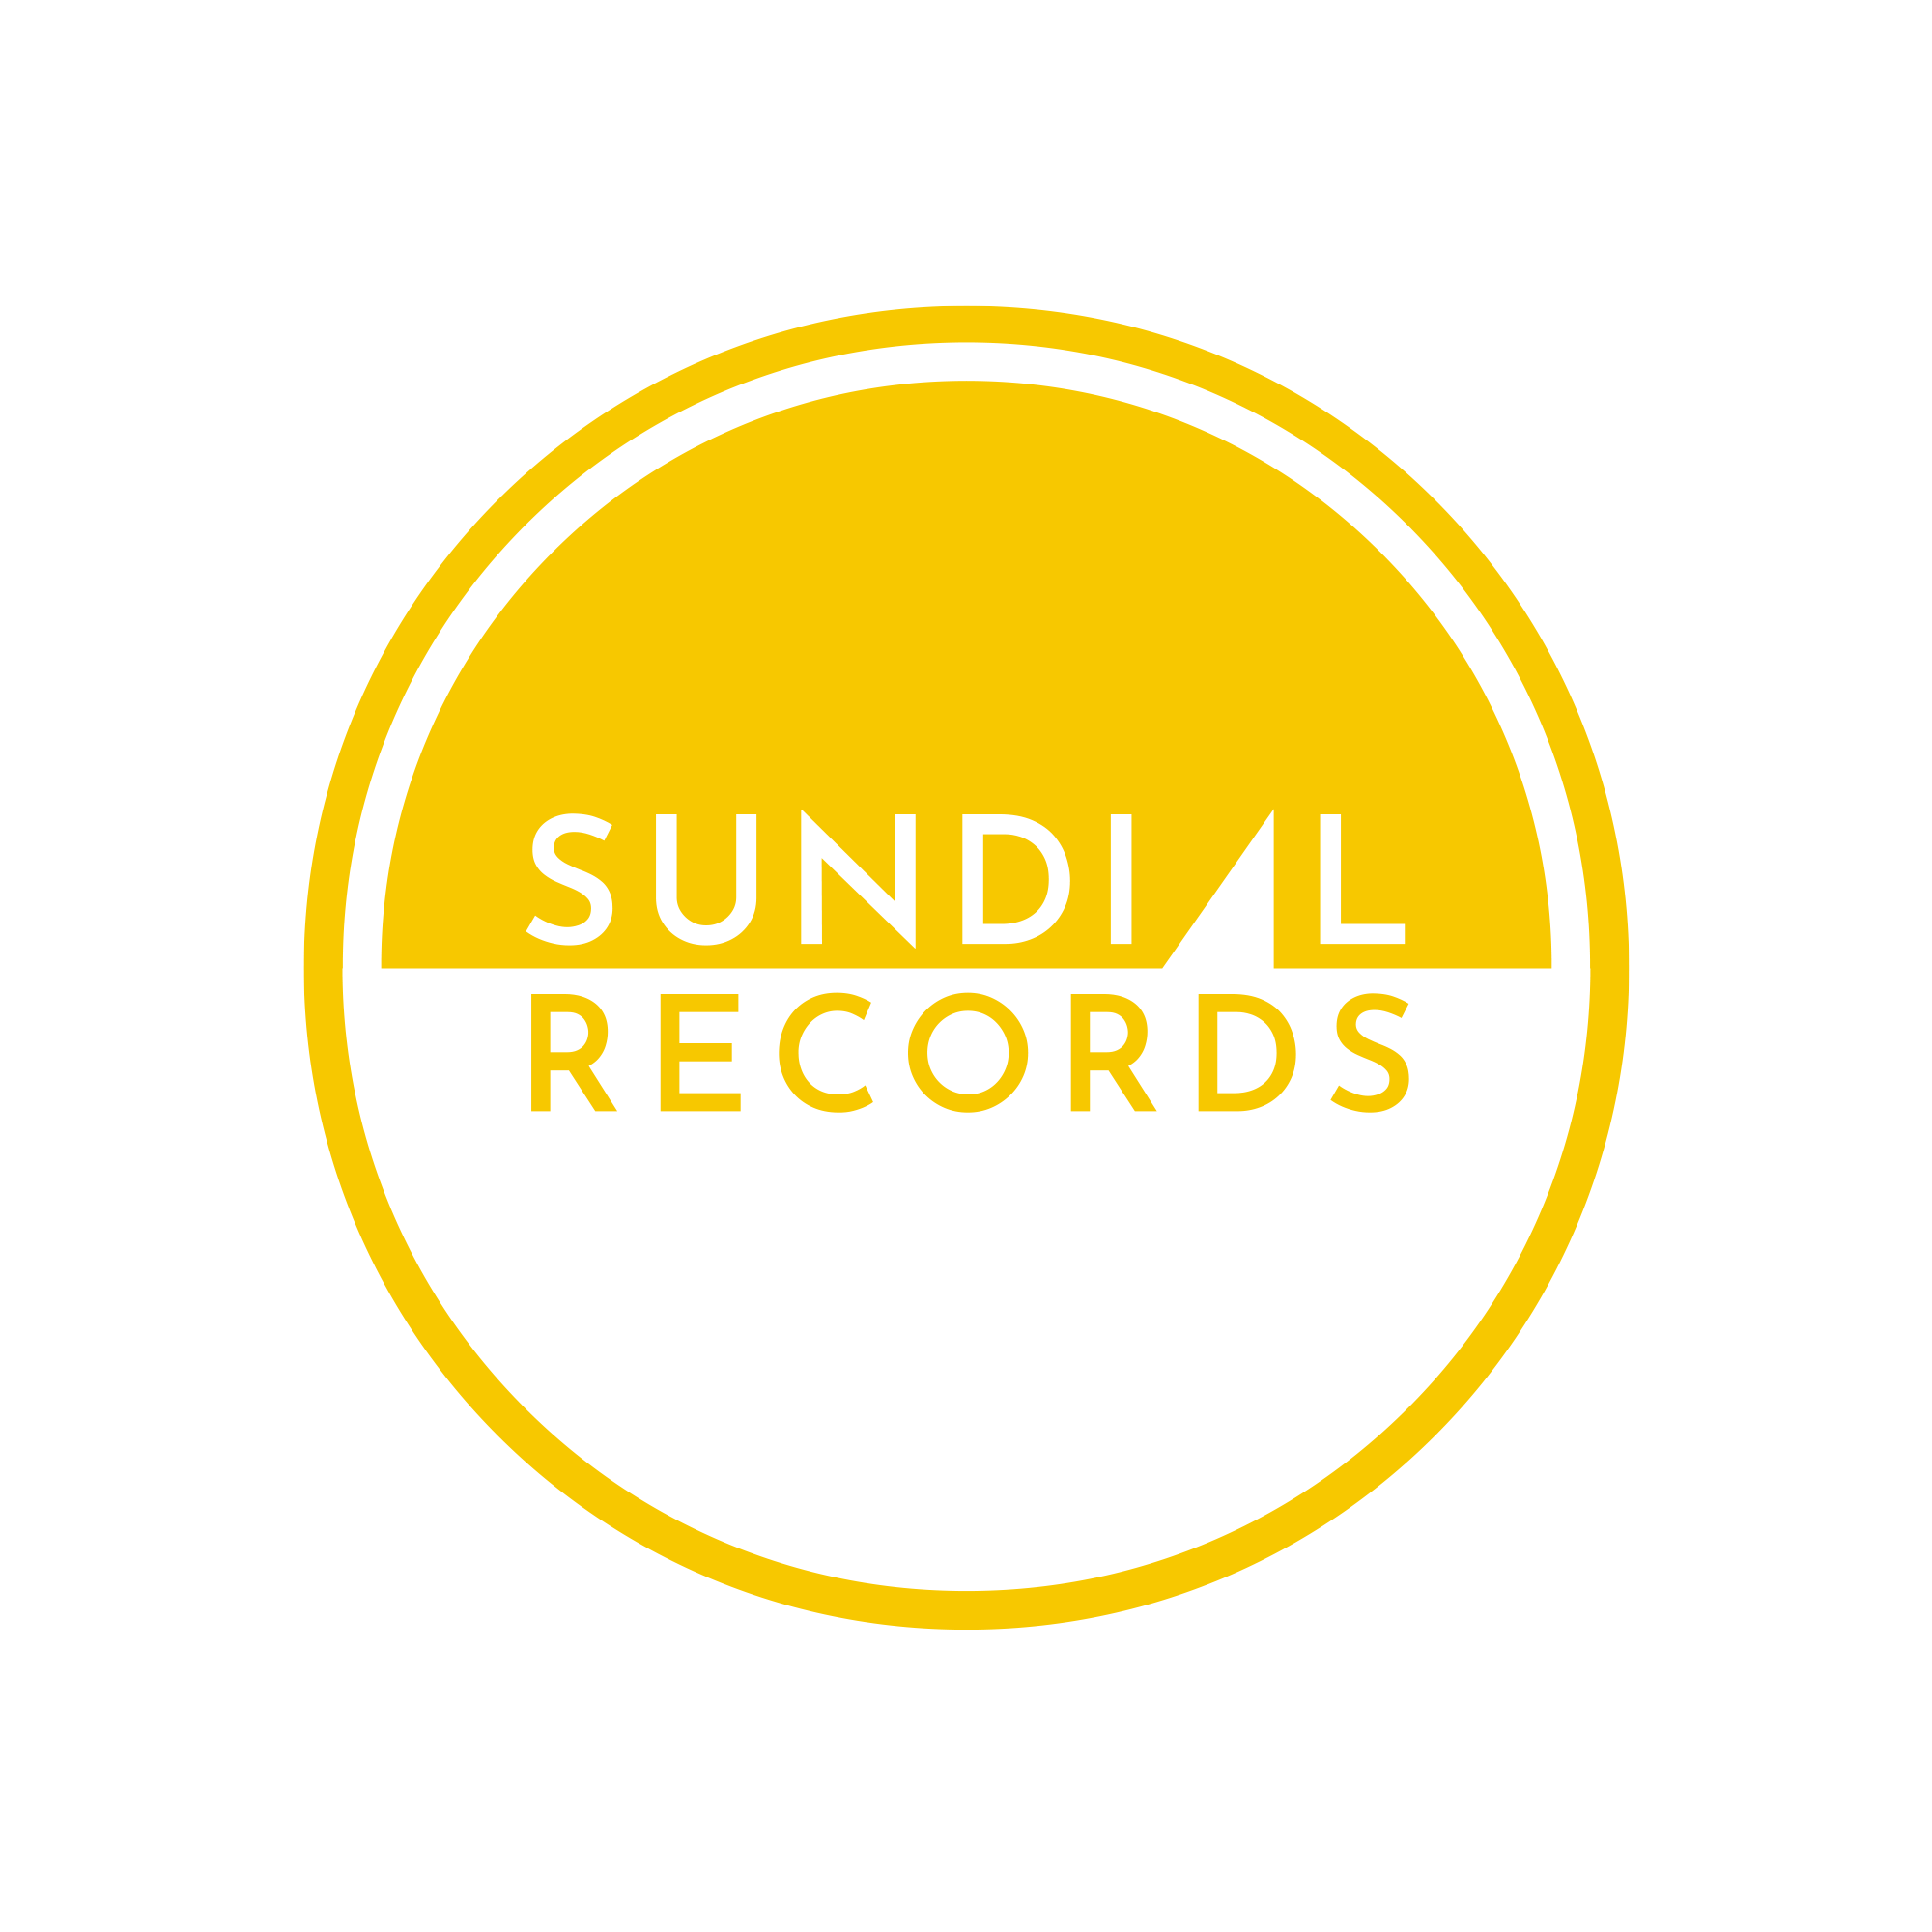 Sundial Records